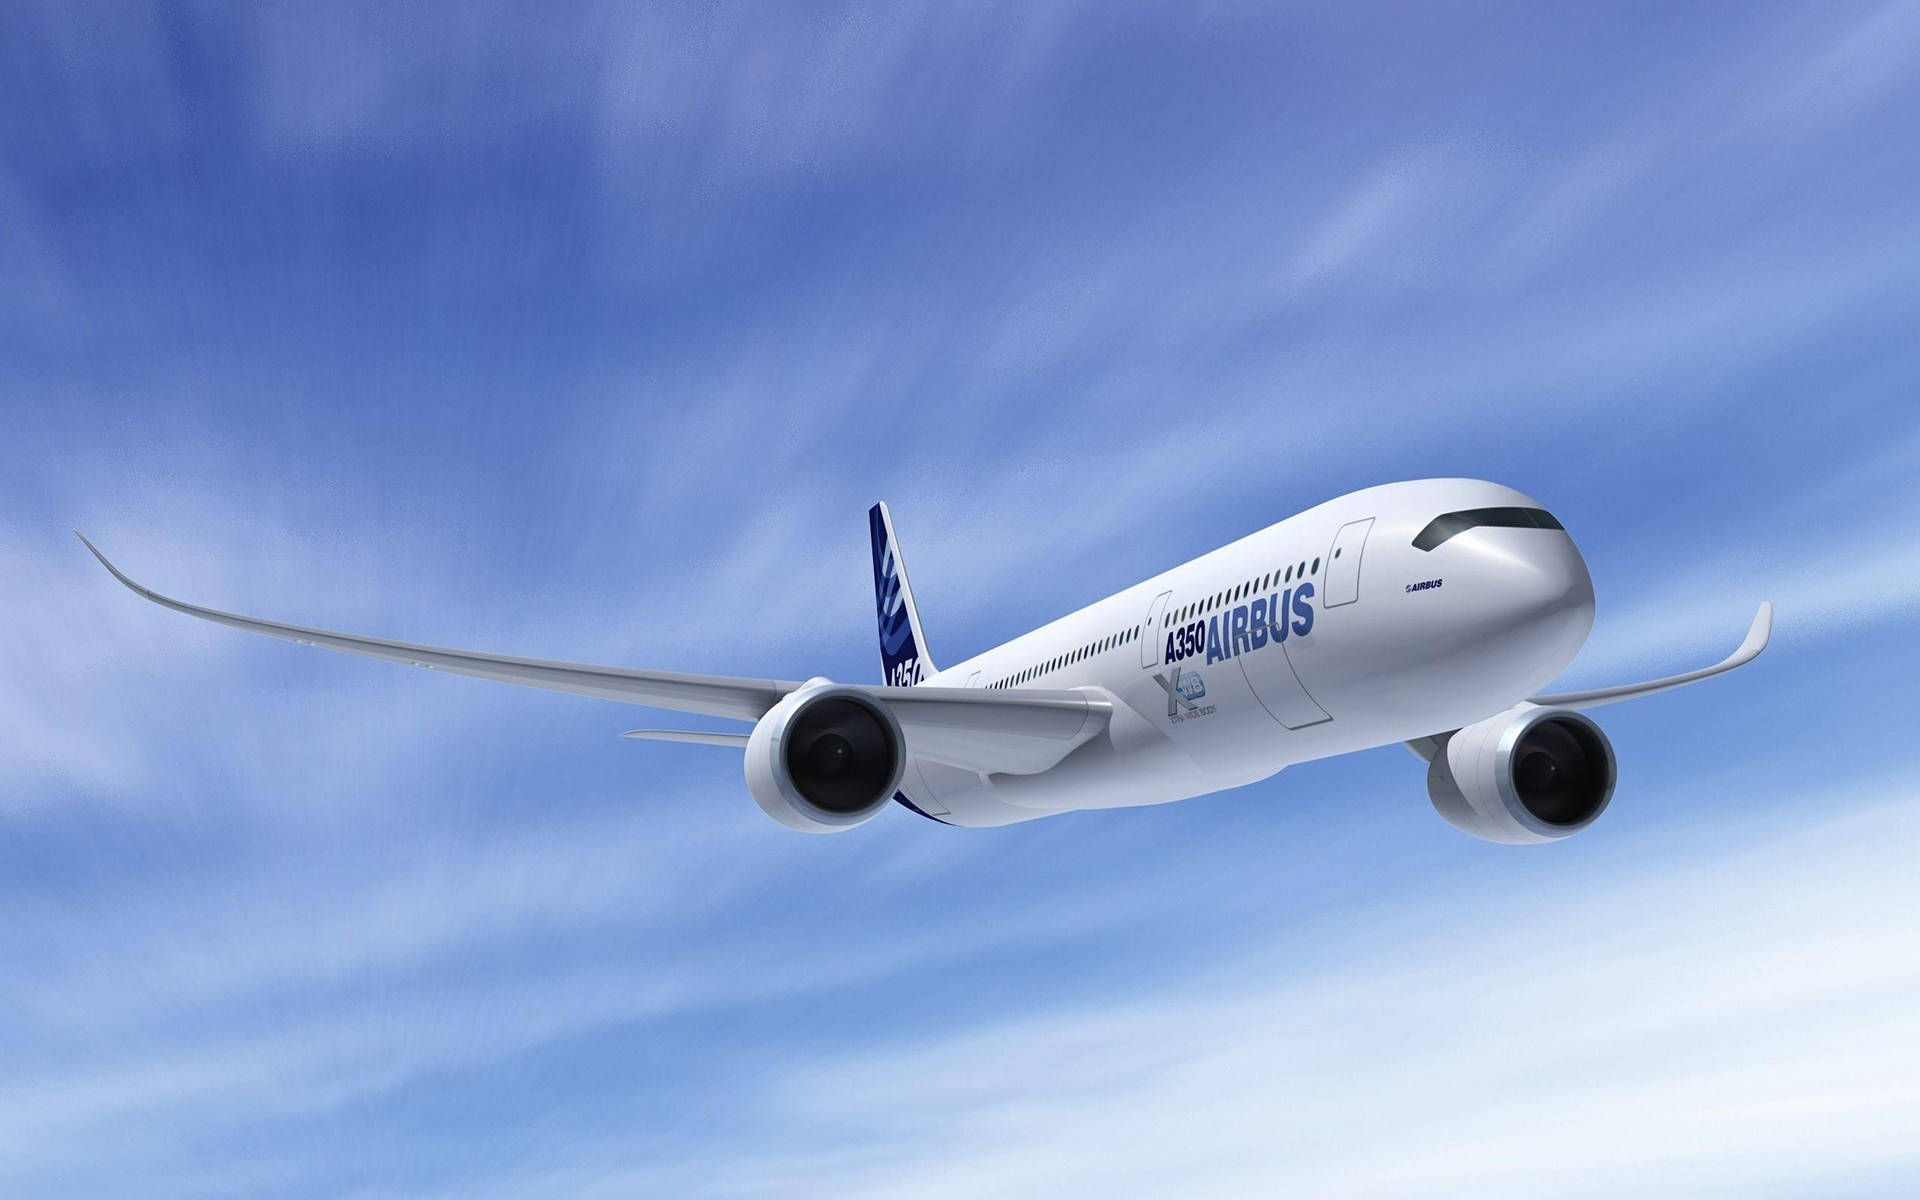 Motion Blur Airbus Hd Plane Wallpaper